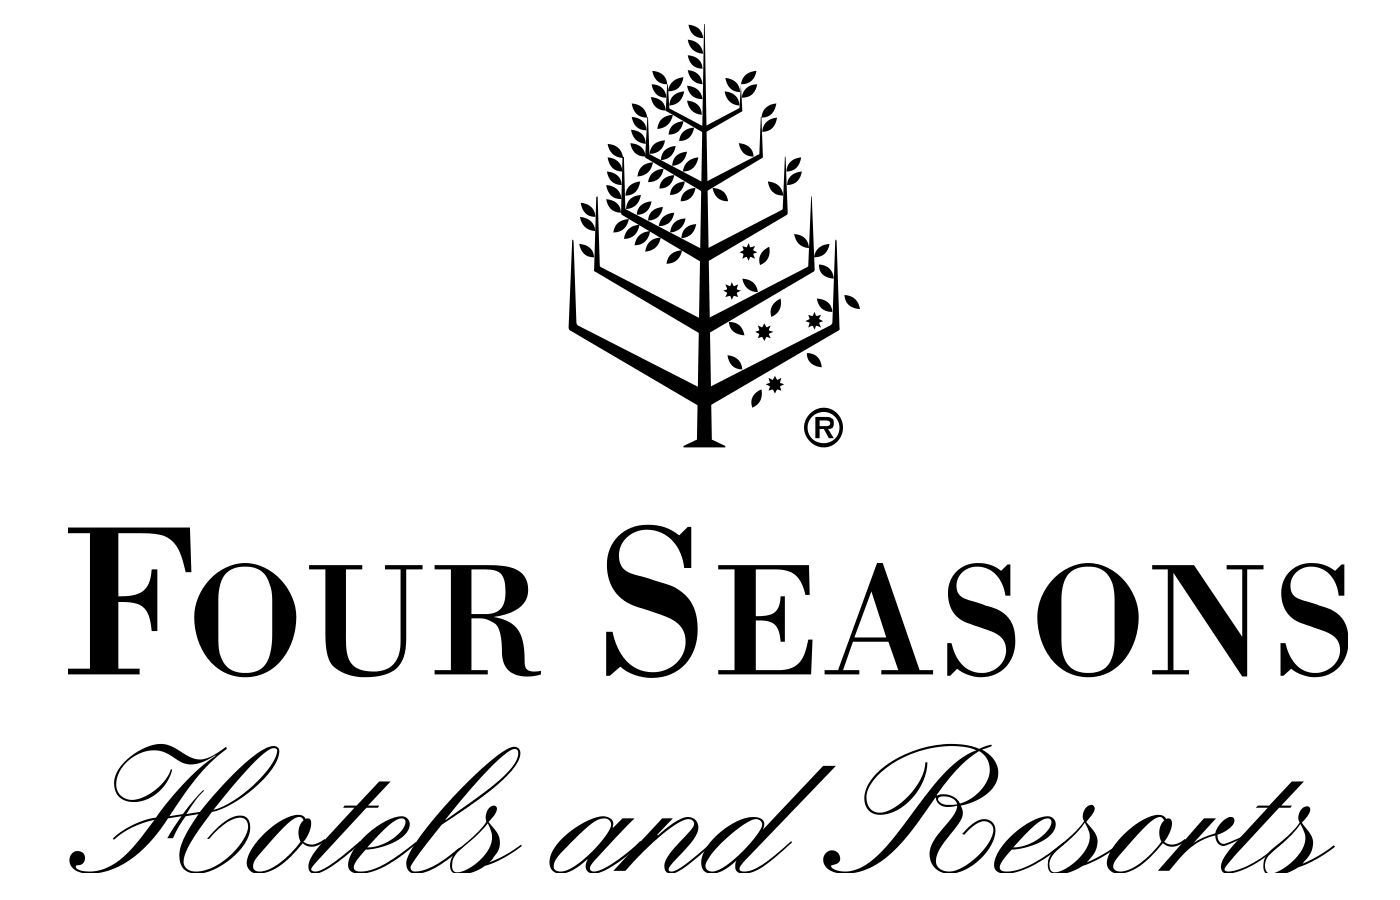 Four Seasons Logo - Four Seasons logo – Hotels and Resorts – Logos Download